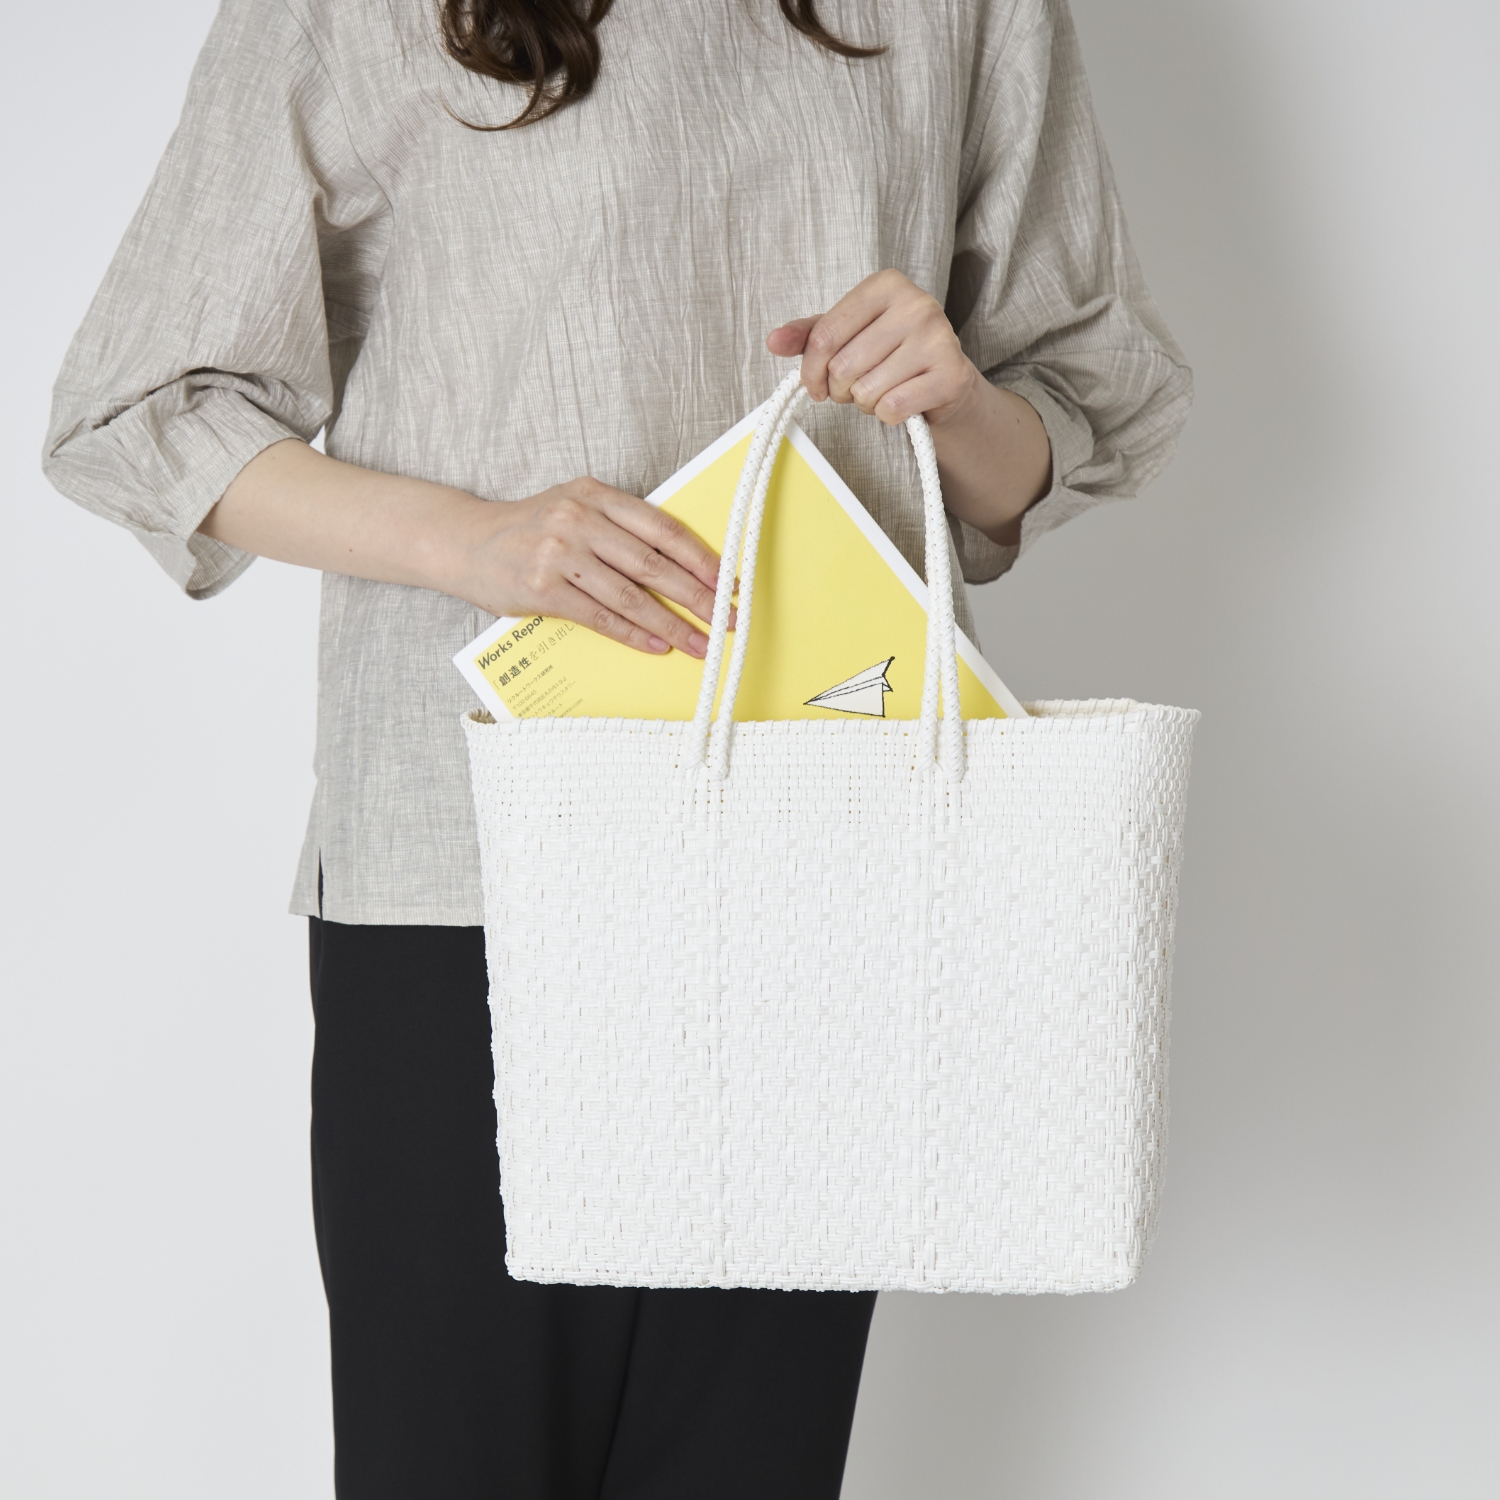 Moonbird/手編みのメルカドバッグ ダイアモンド柄 - 夏らしい涼し気なデザインで、A4サイズもすっぽり入るメルカドバッグ